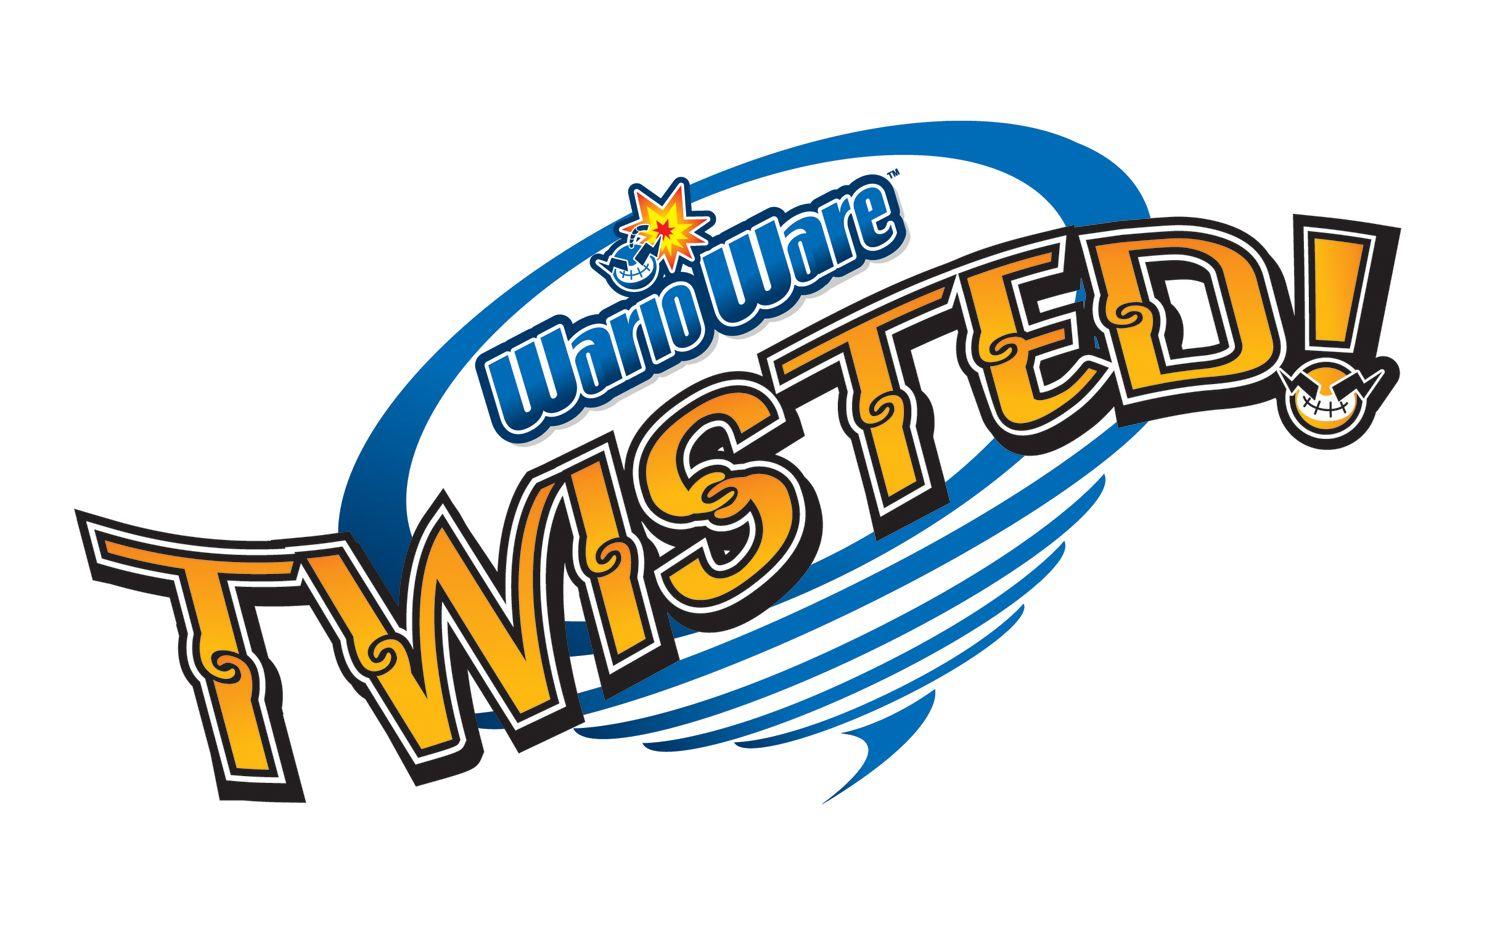 WarioWare Logo - WarioWare: Twisted! (2004) promotional art